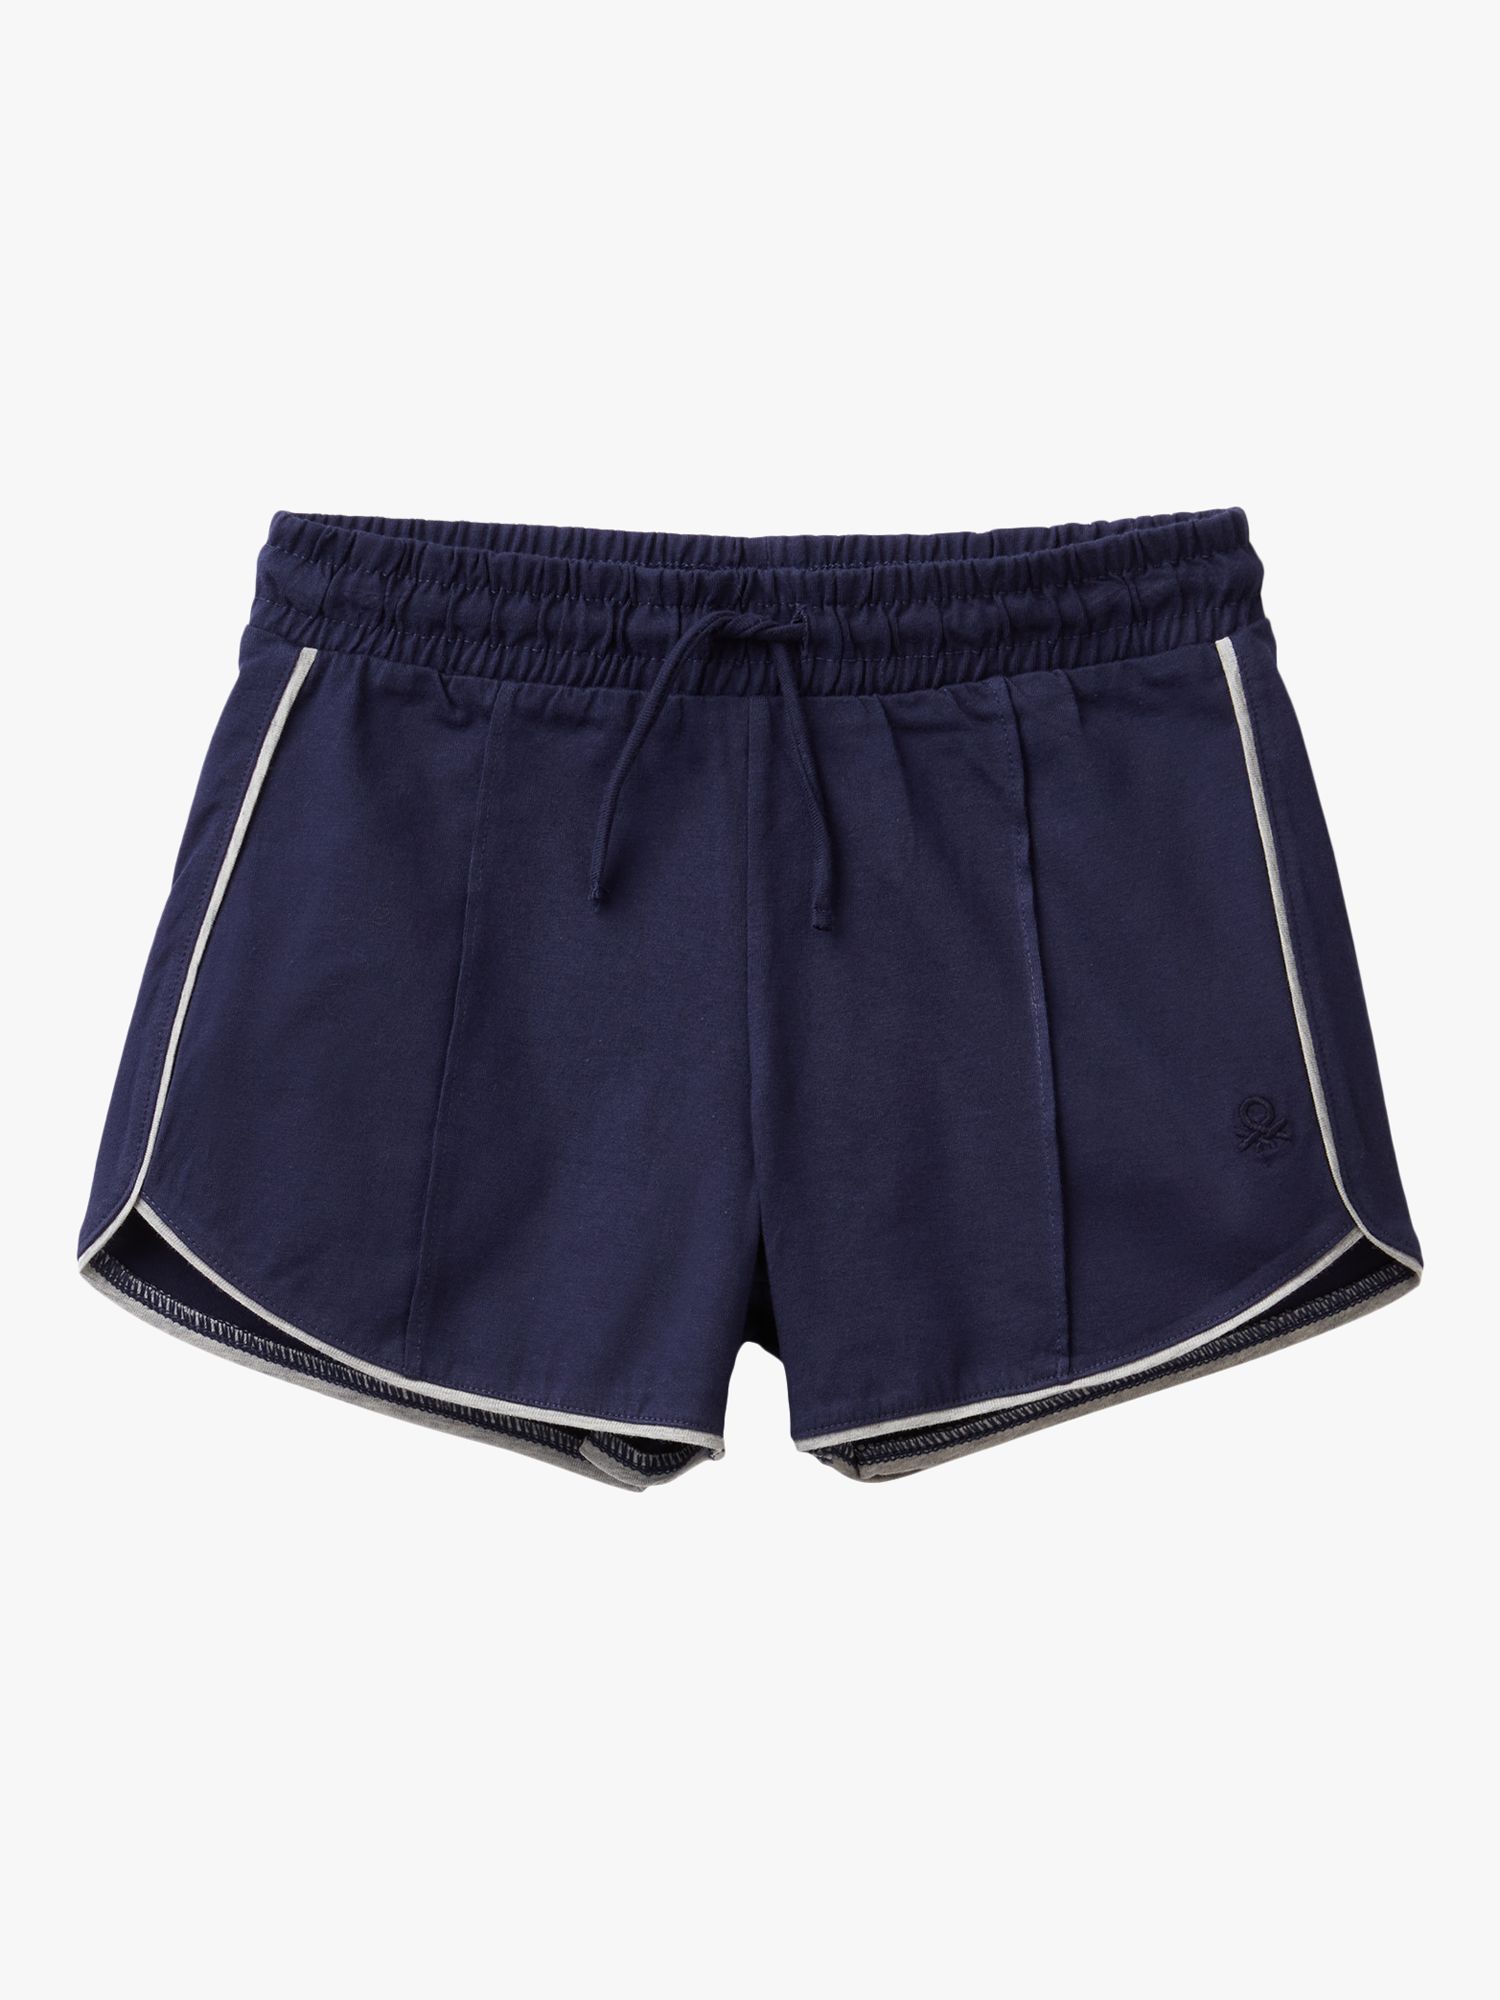 Benetton Kids' Sweat Shorts, Night Blue, 6-7 years